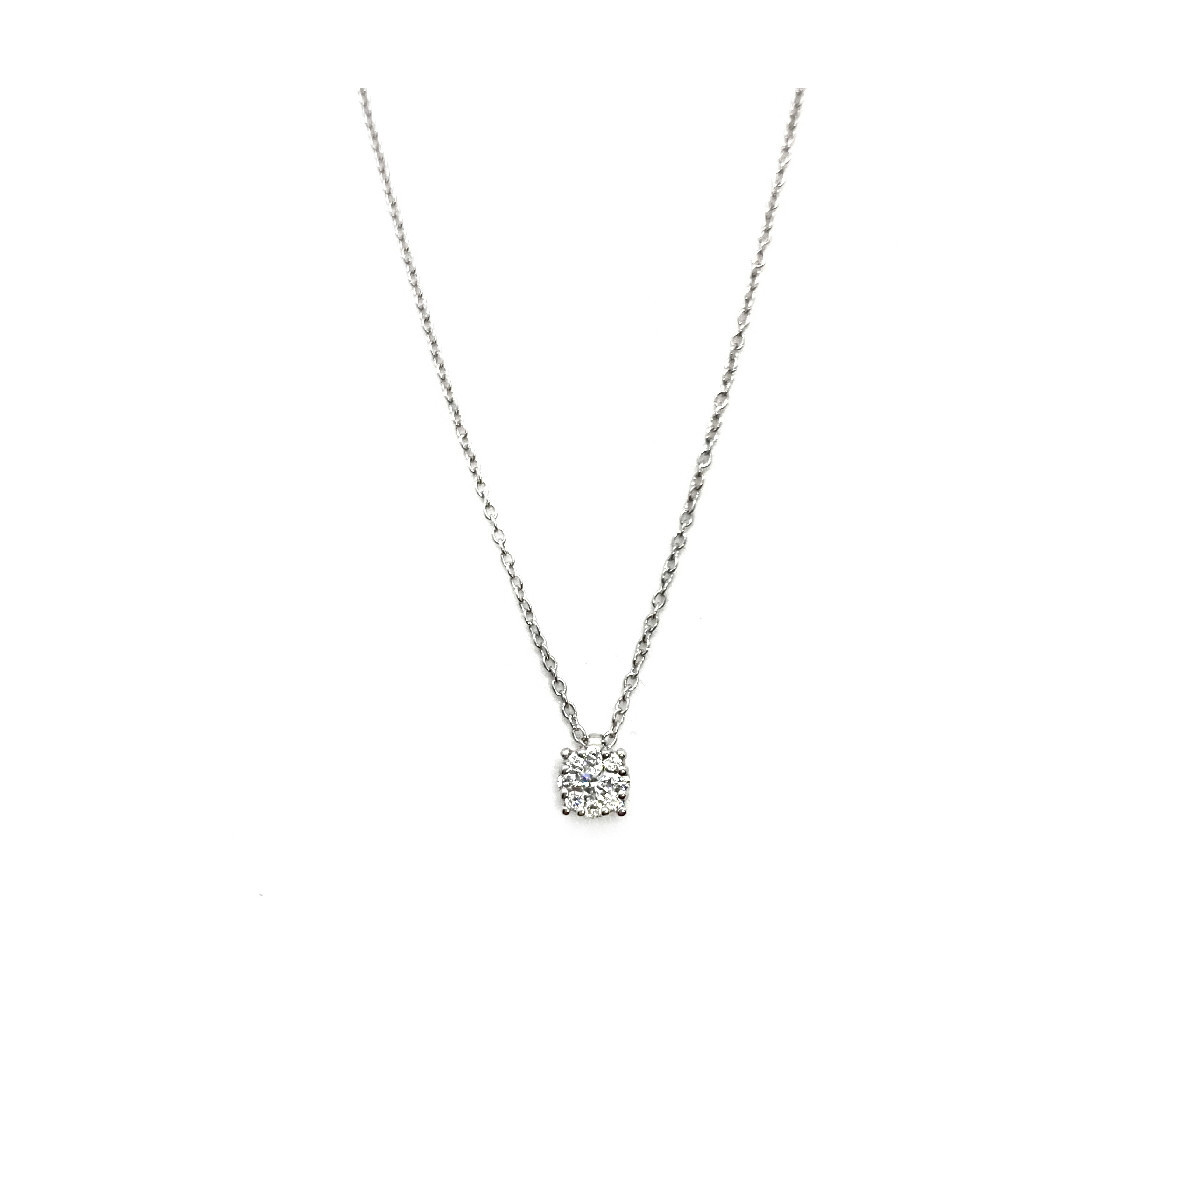 SUPERORO WHITE GOLD AND DIAMONDS NECKLACE - A50-S10C-43:01